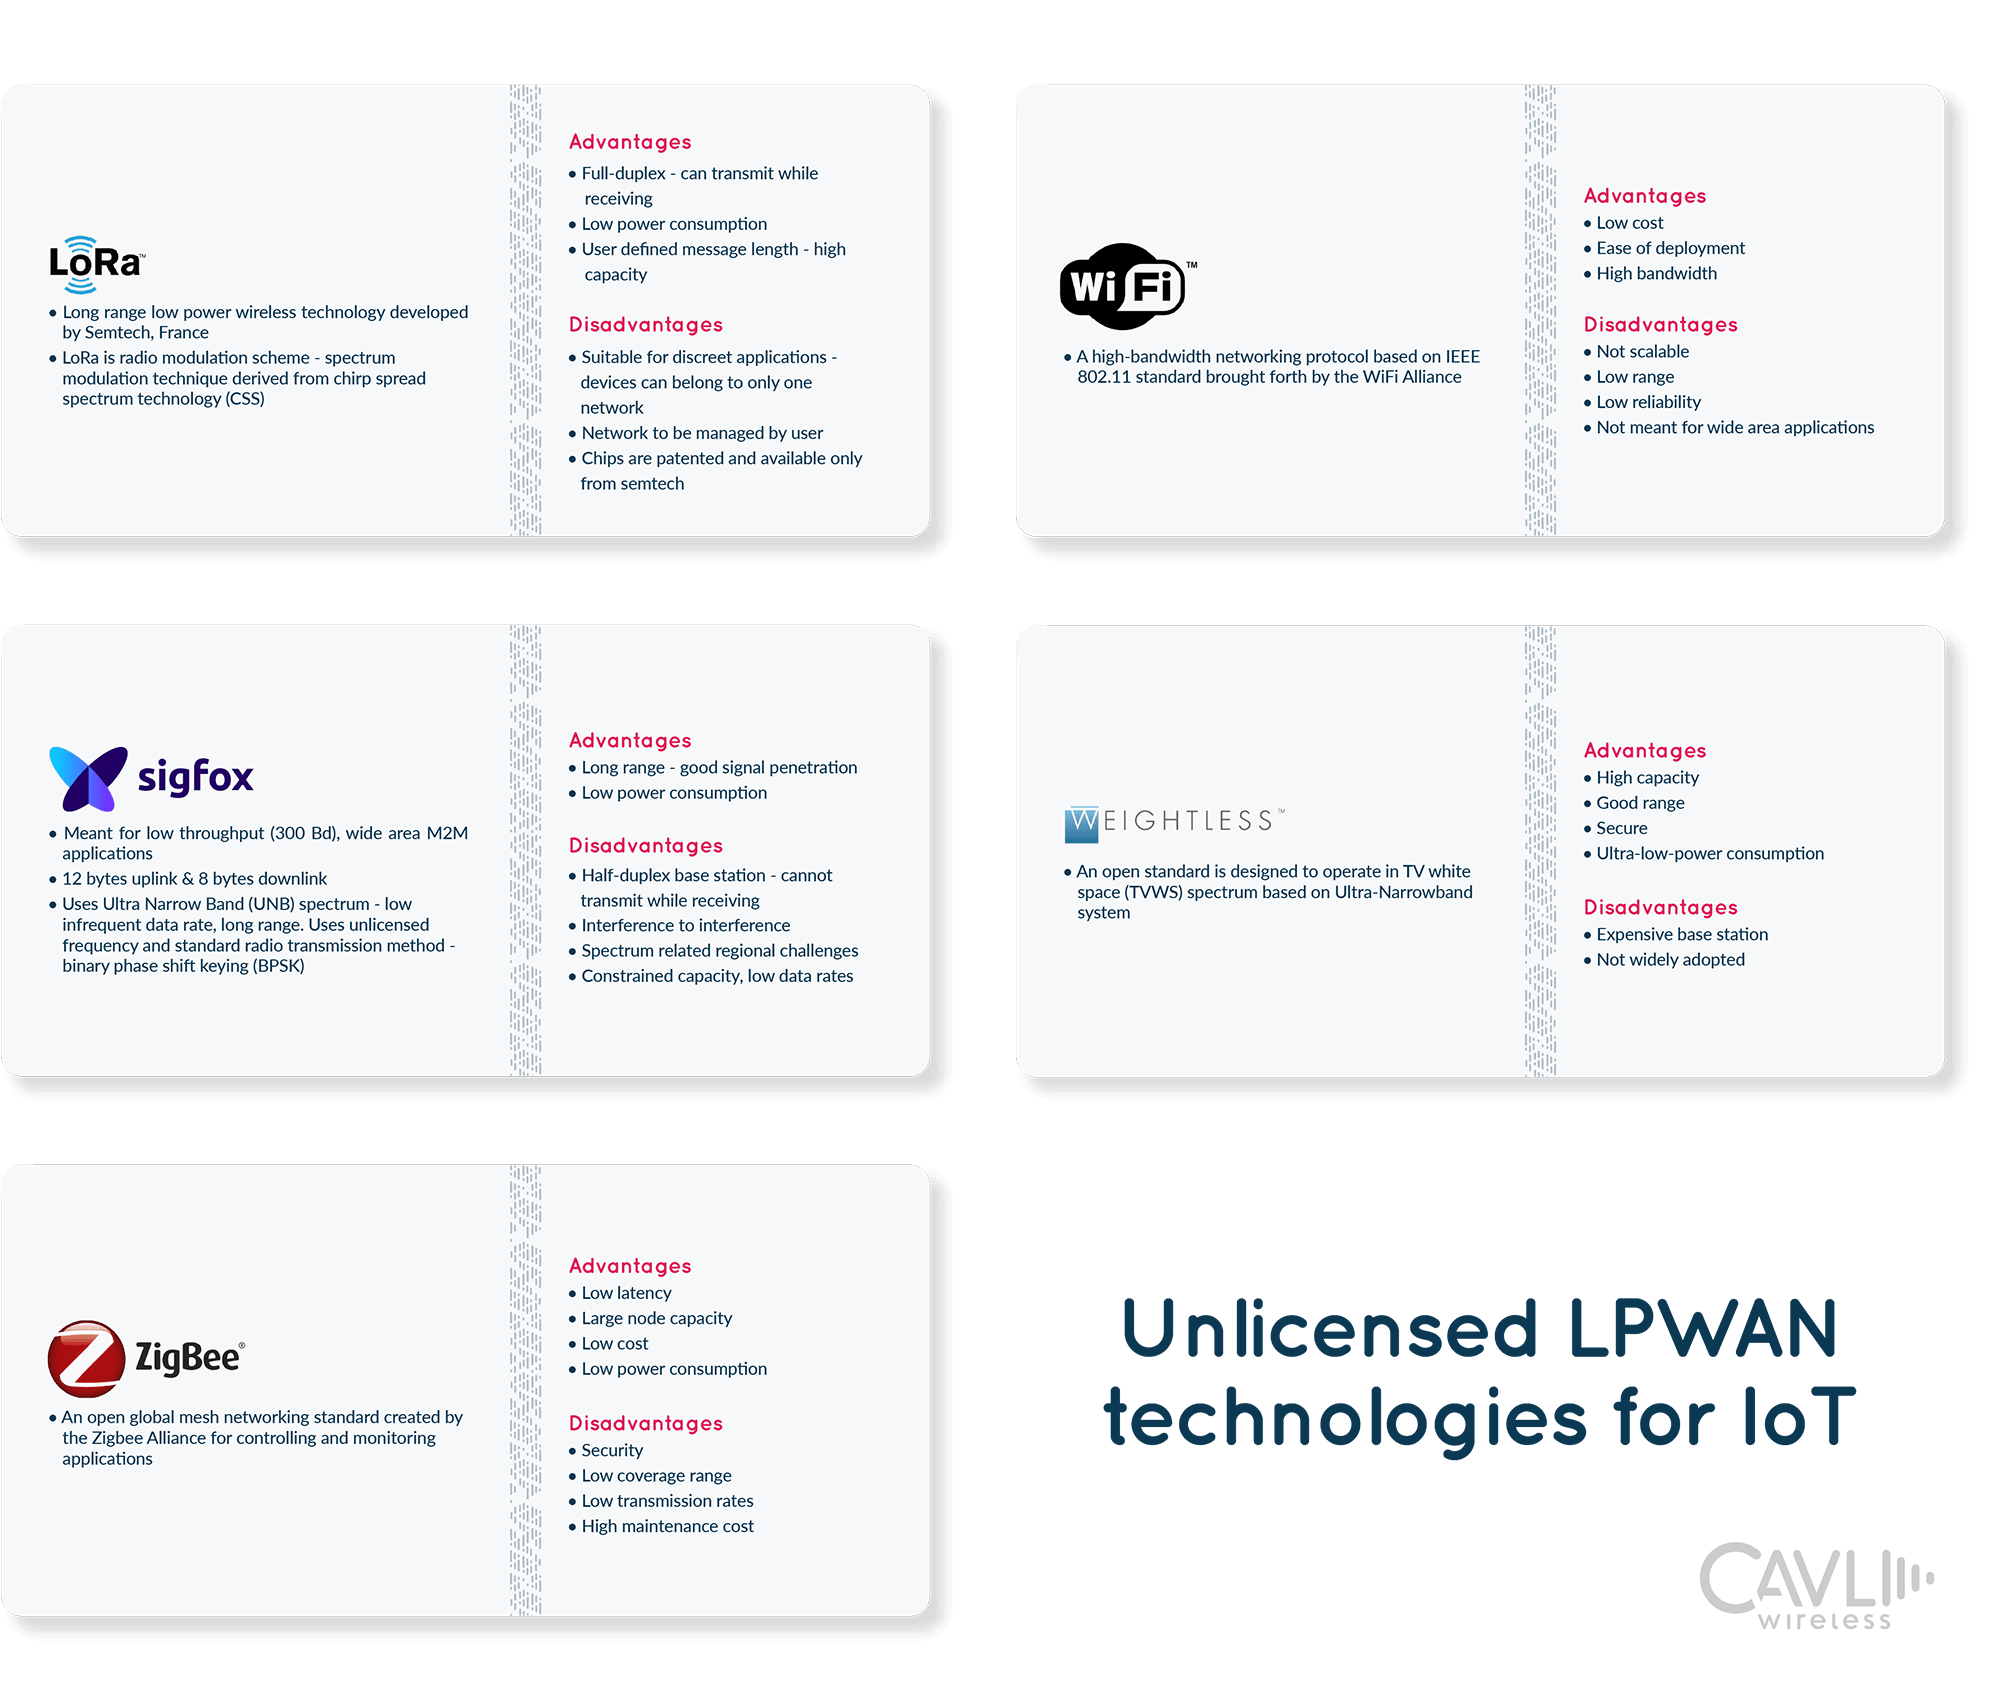 LPWAN technologies